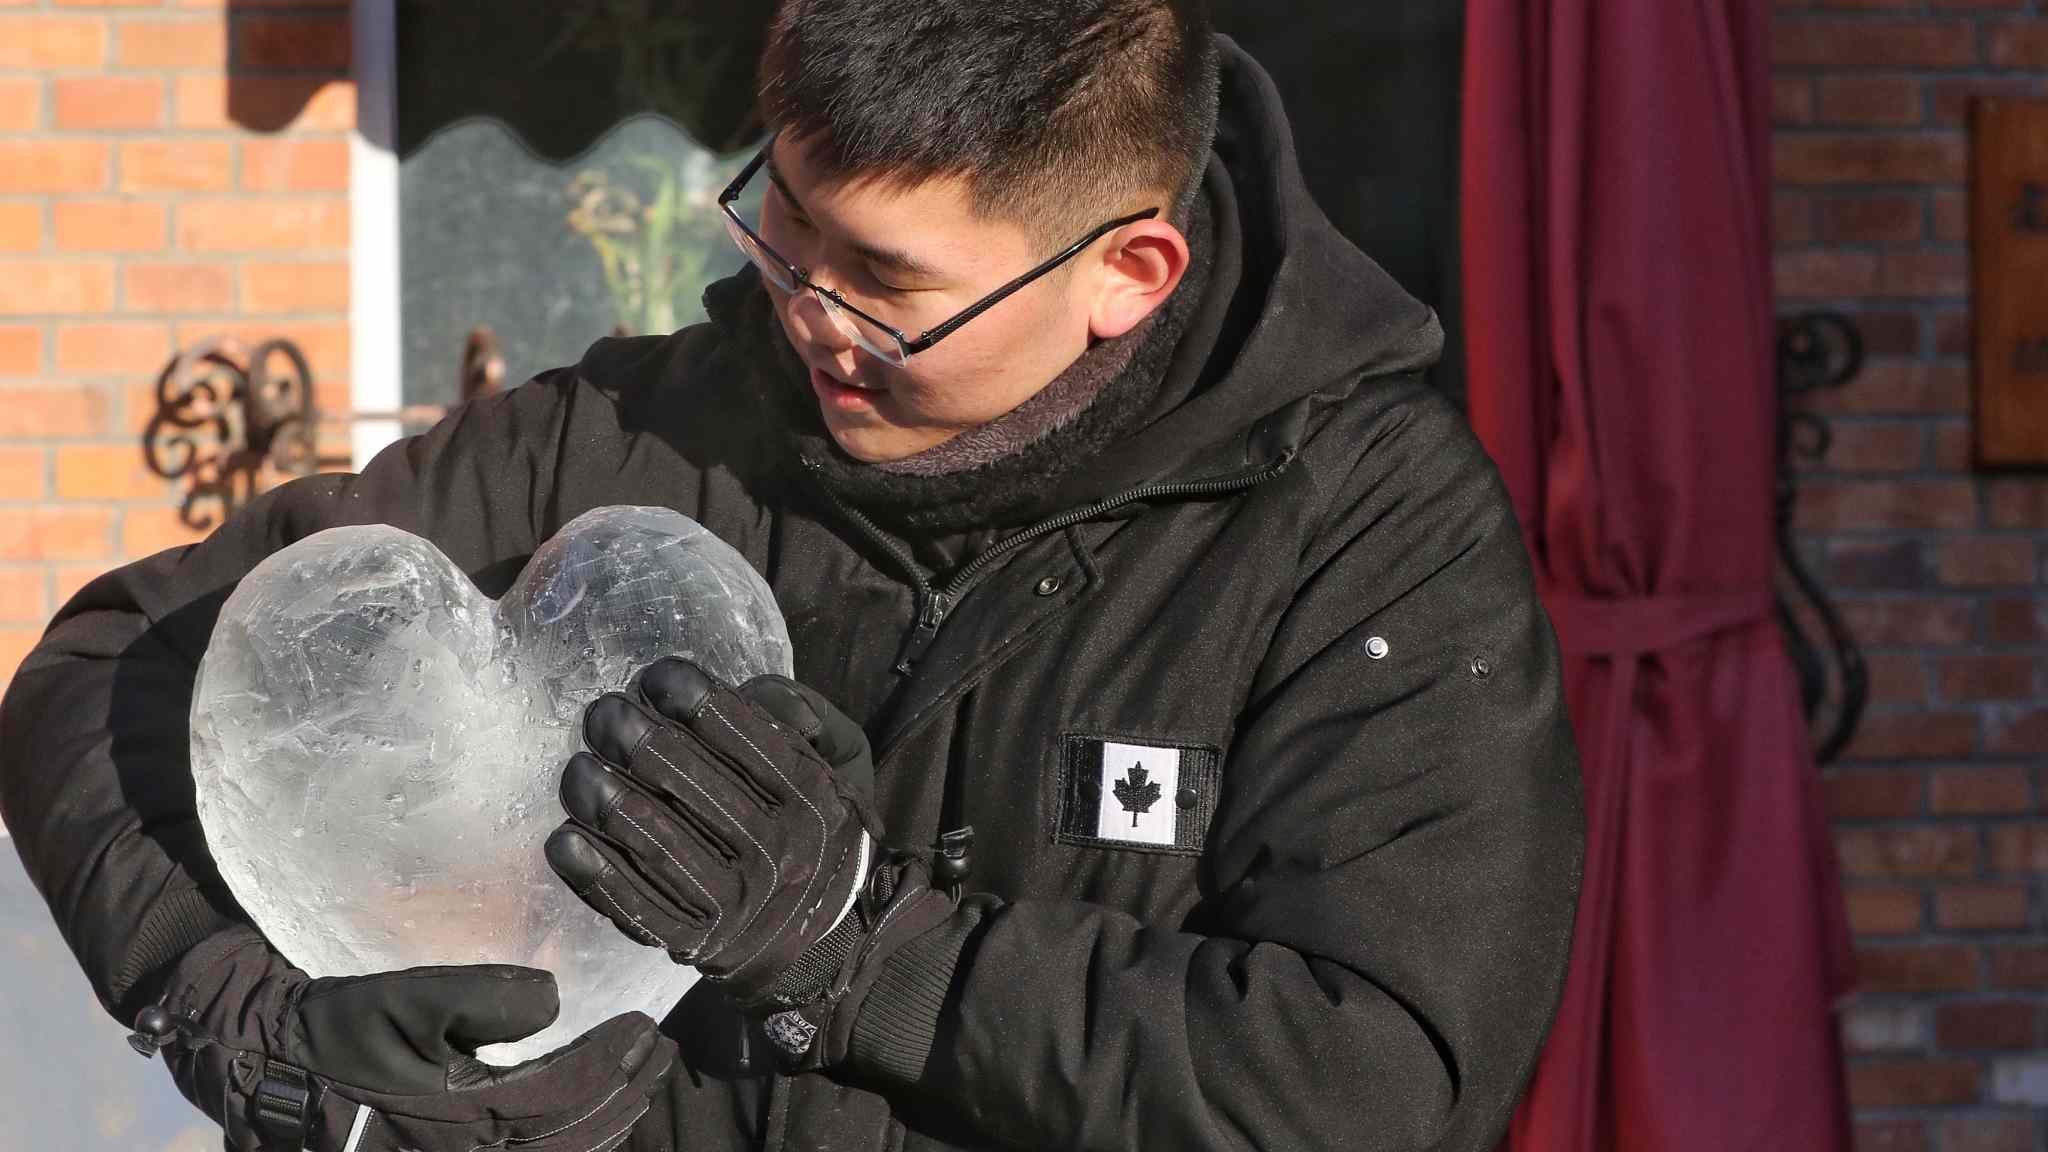 making ice sculptures